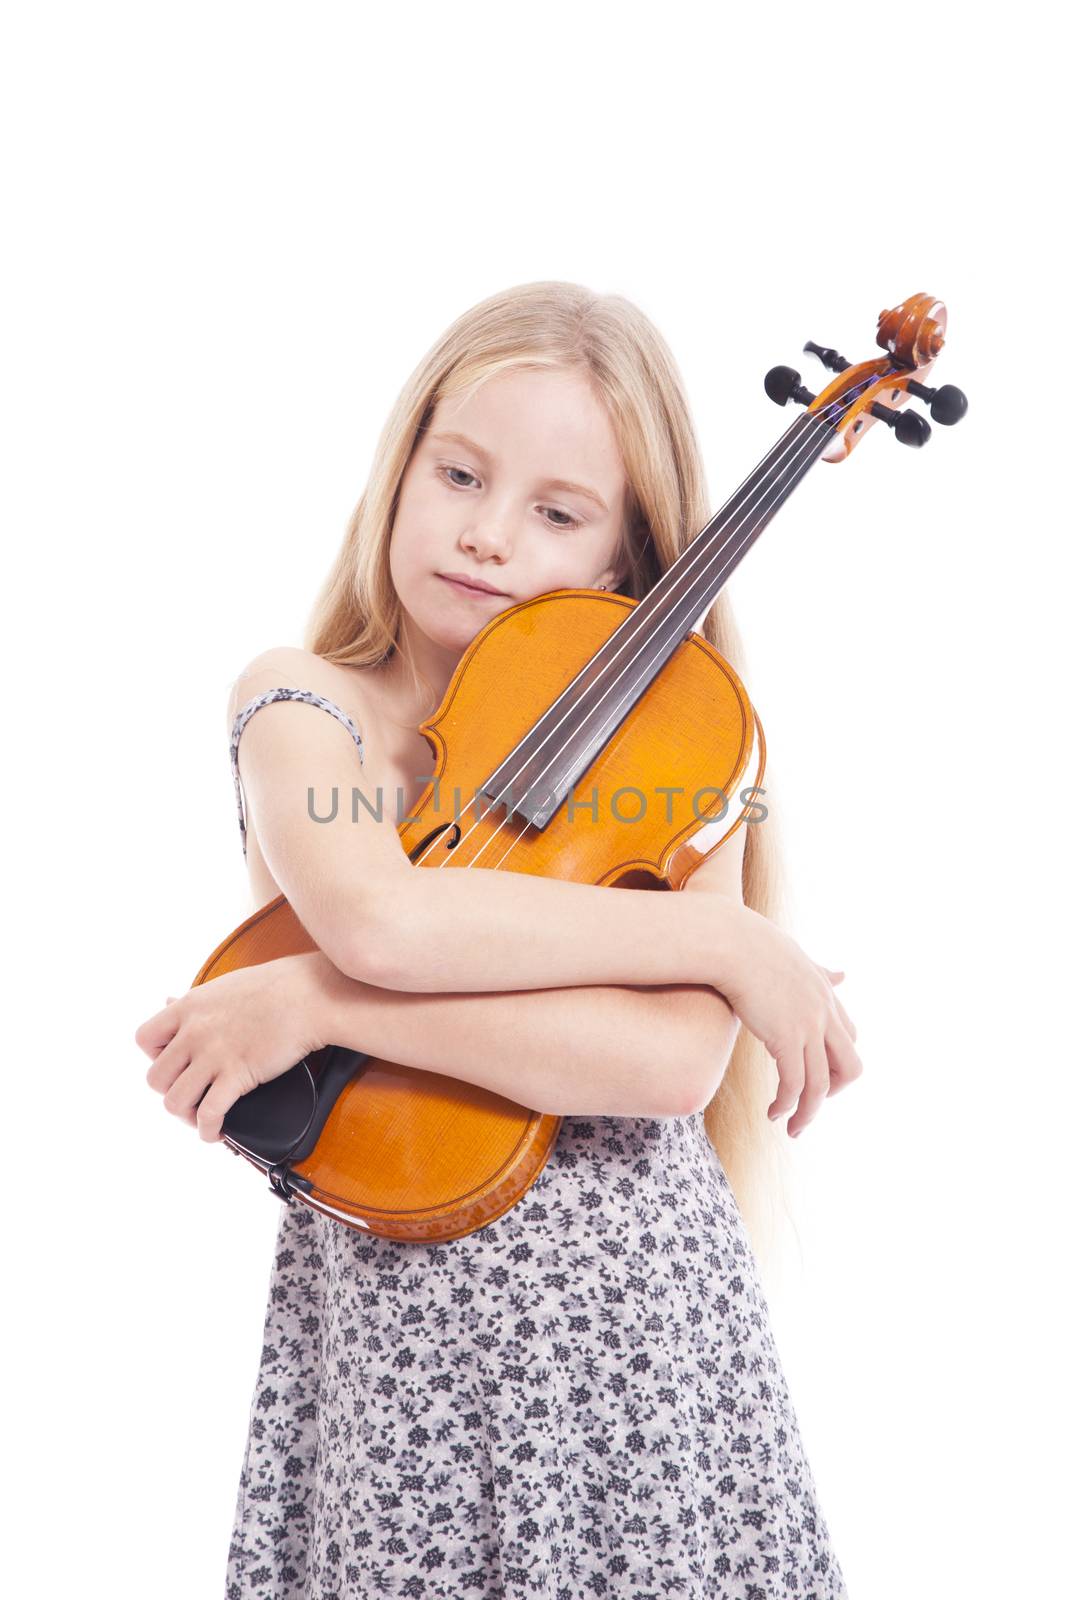 young girl in dress embracing violin in studio